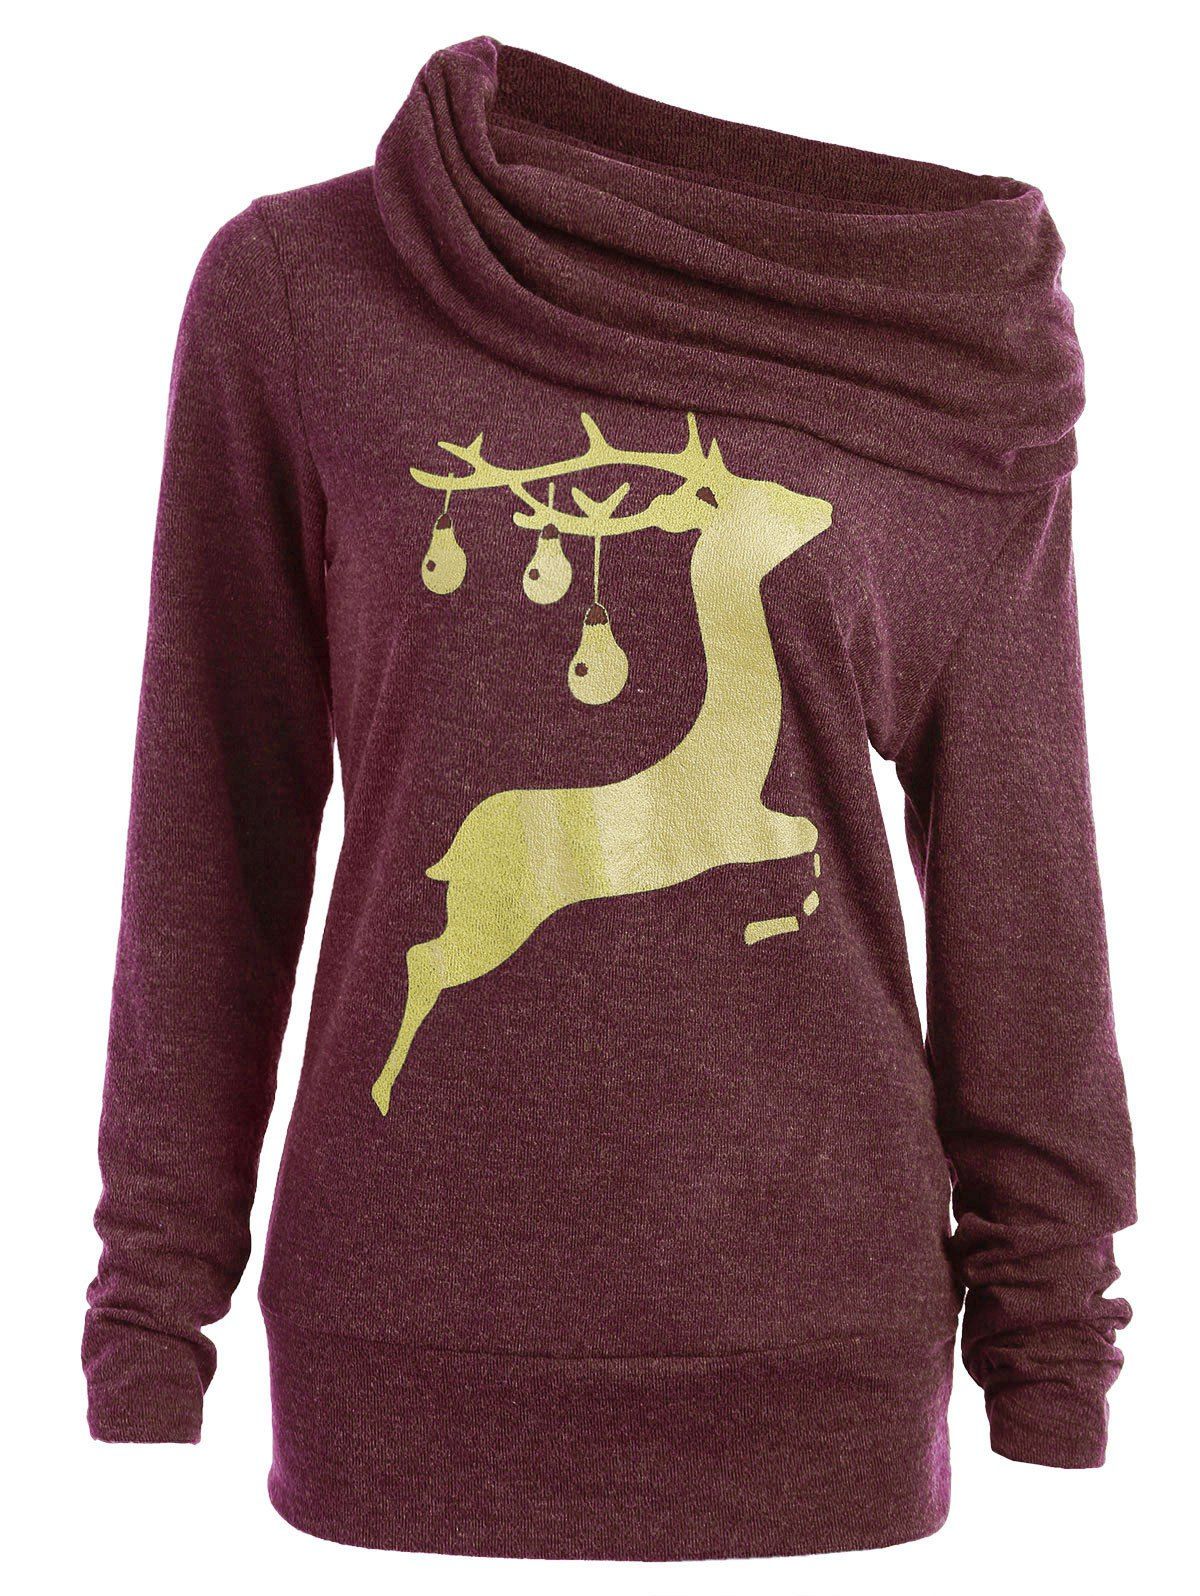 Cowl Neck Elk Deer Print Sweatshirt - WINE RED L